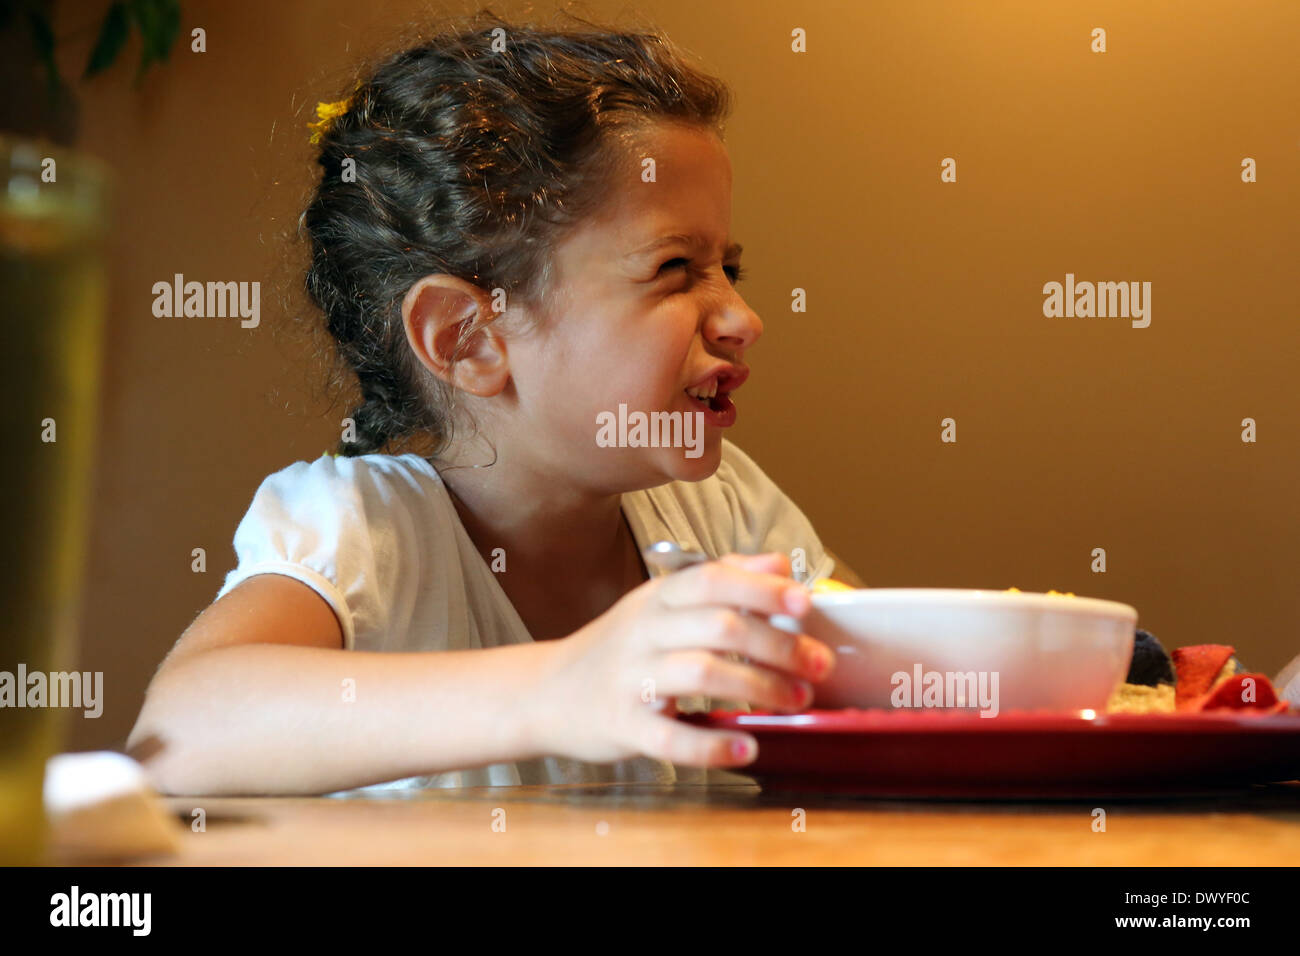 Du Bois, Stati Uniti d'America, bambina richiama mentre mangia il naso krauss Foto Stock